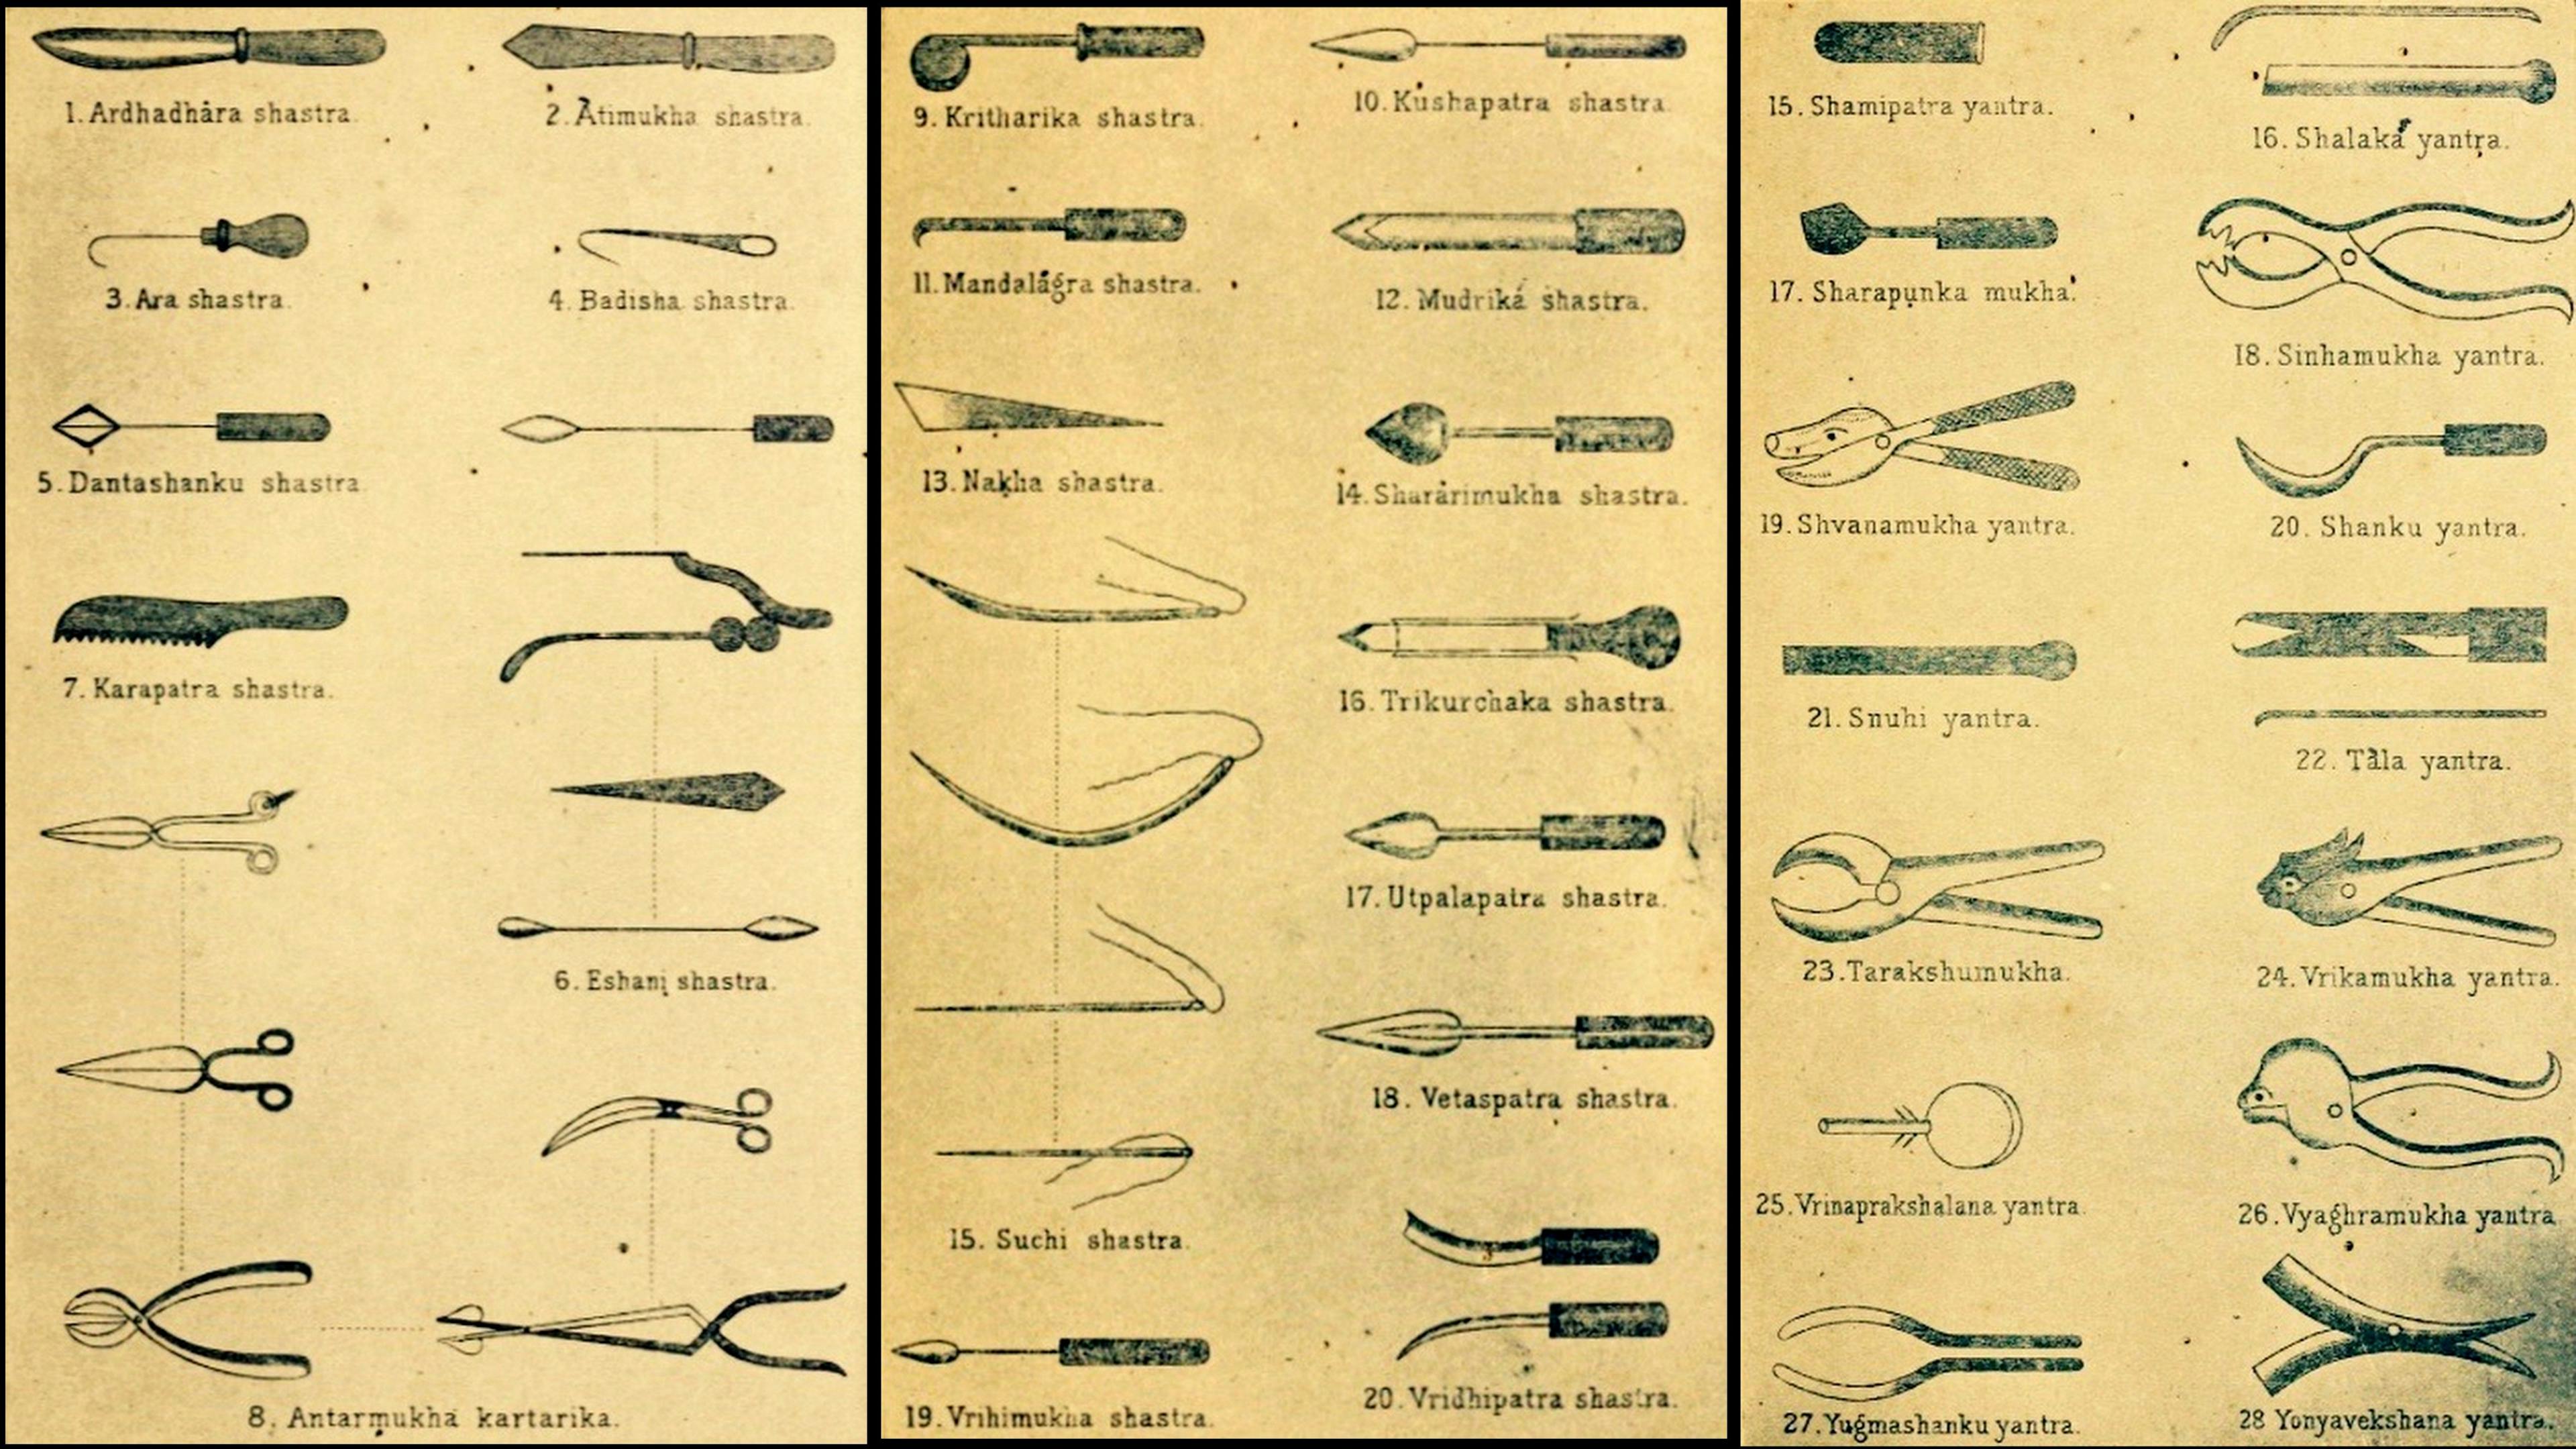 Surgical instruments mentioned in Sushruta Samhita